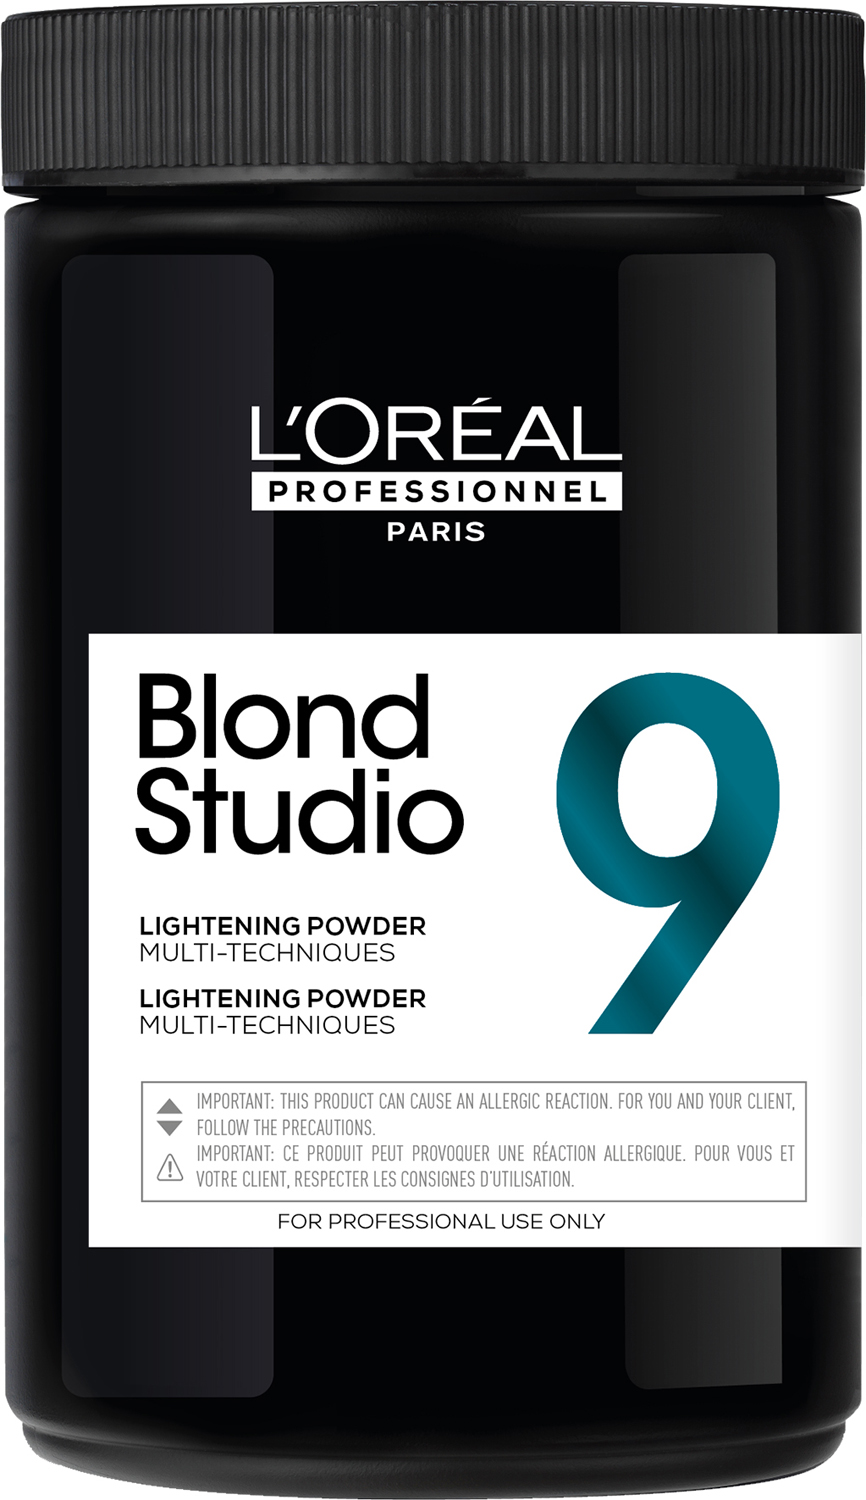 Blond Studio 9 Lightening Powder 9 Tones, 500g